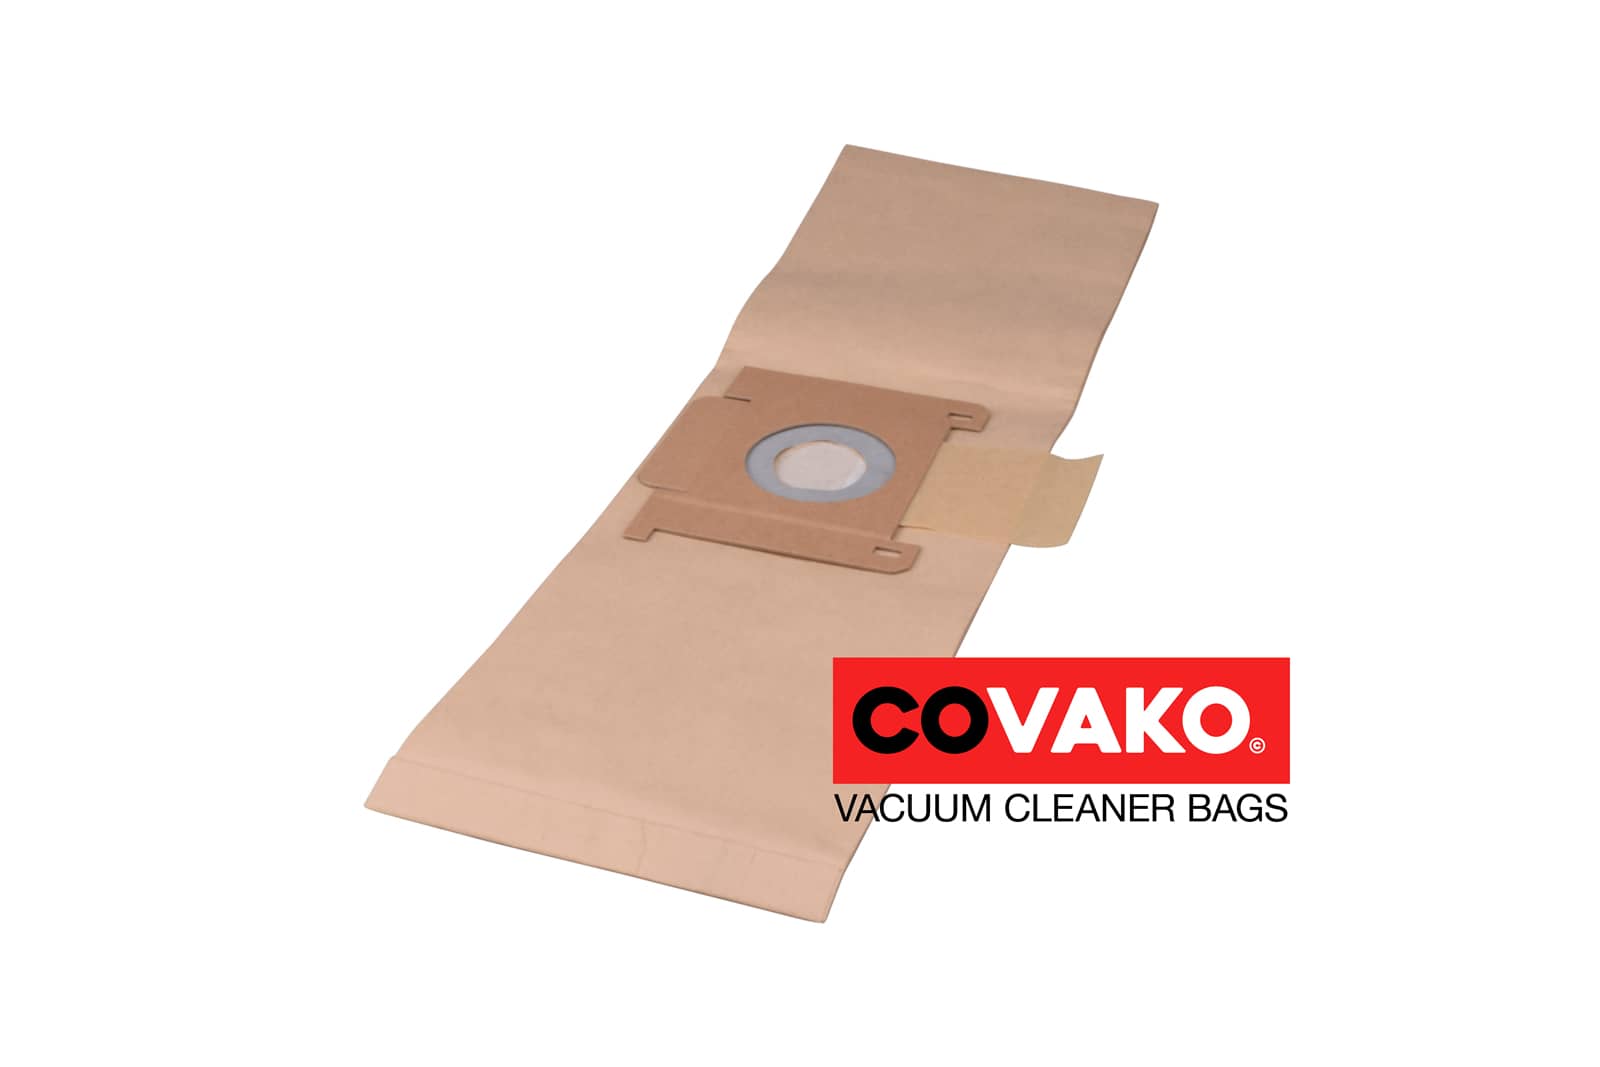 I-vac C6 / Paper - I-vac vacuum cleaner bags